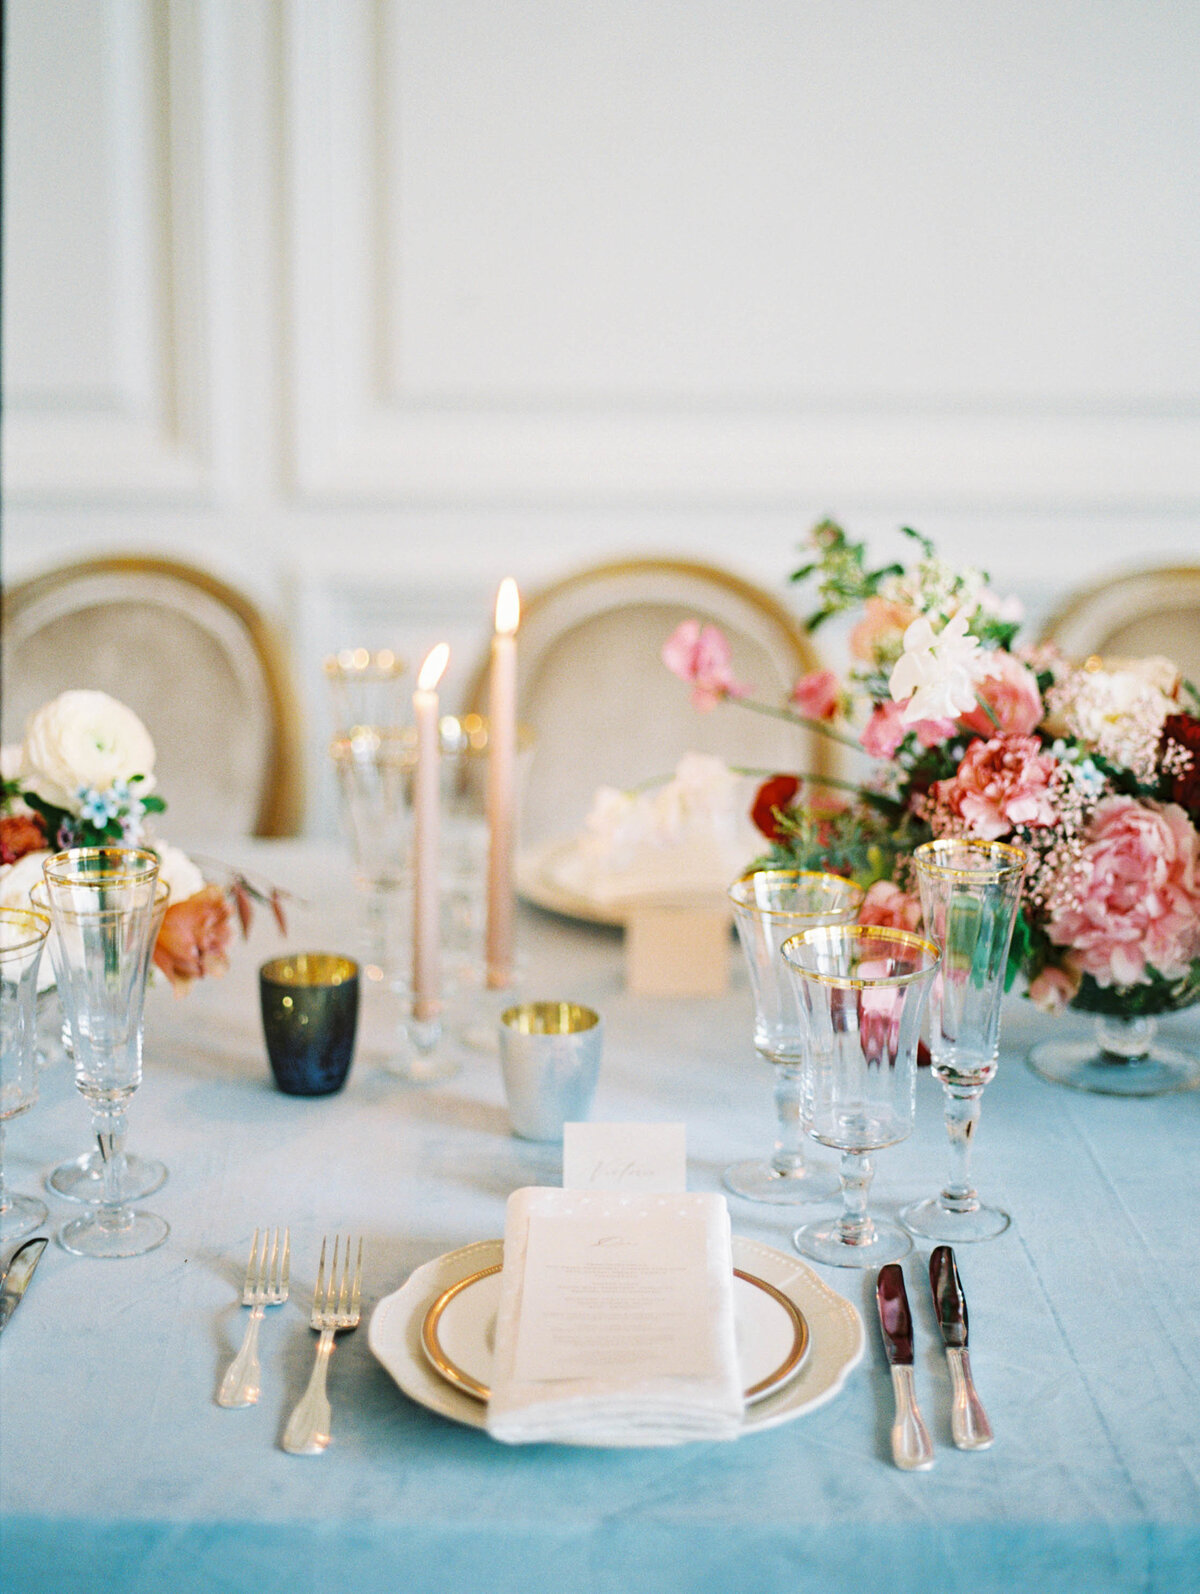 max-owens-design-pink-european-inspired-wedding-07-velvet-place-setting